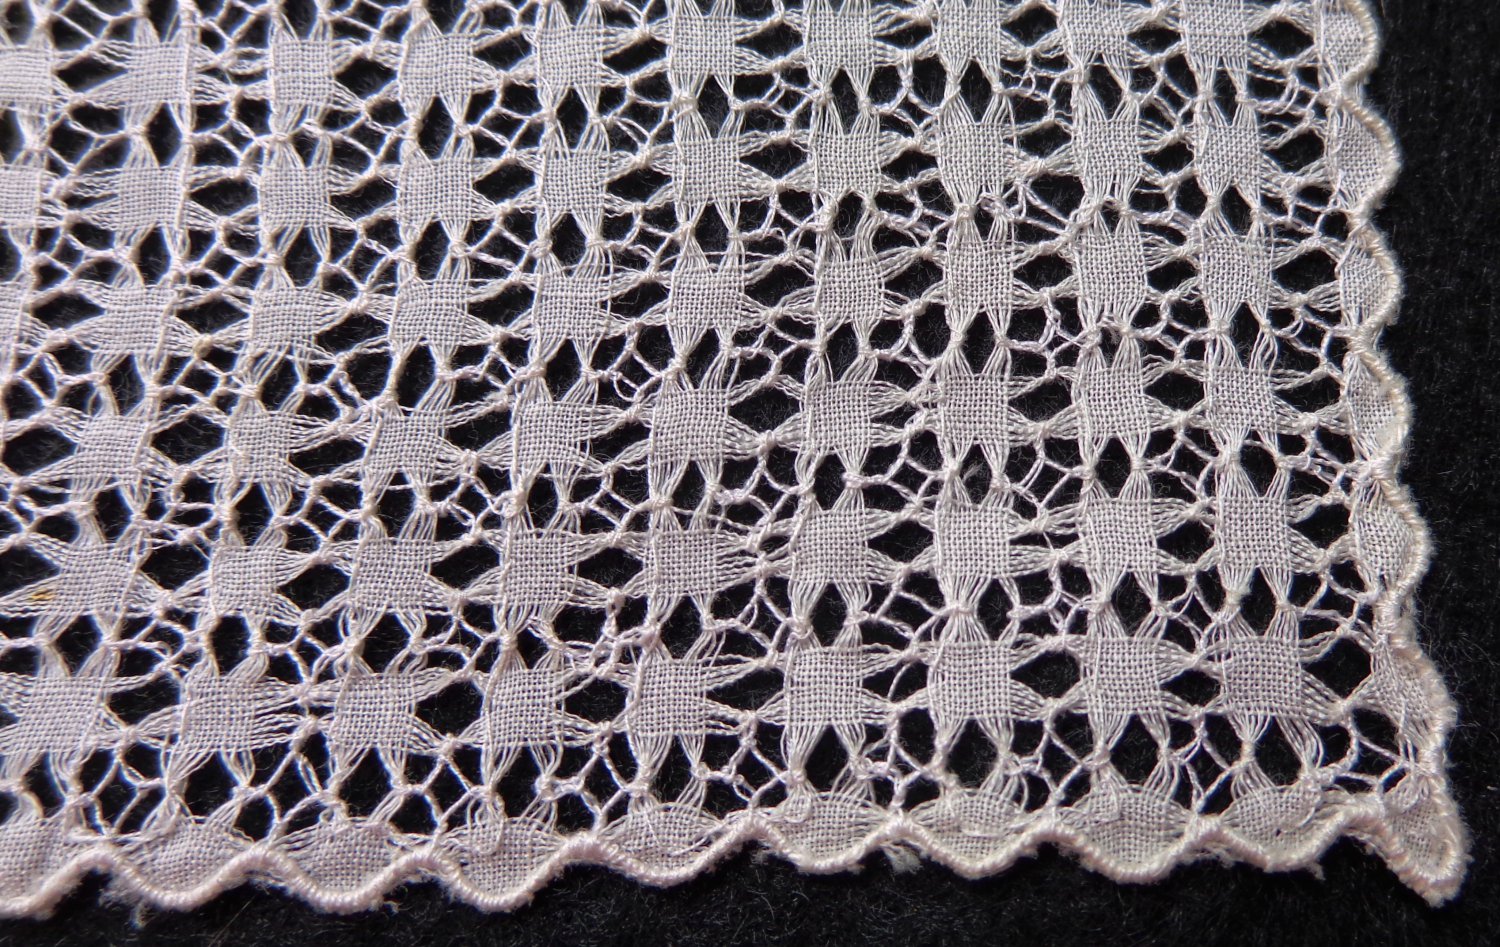 Linen and Saba threadwork lace ladies wedding hanky handmade vintage ll3335